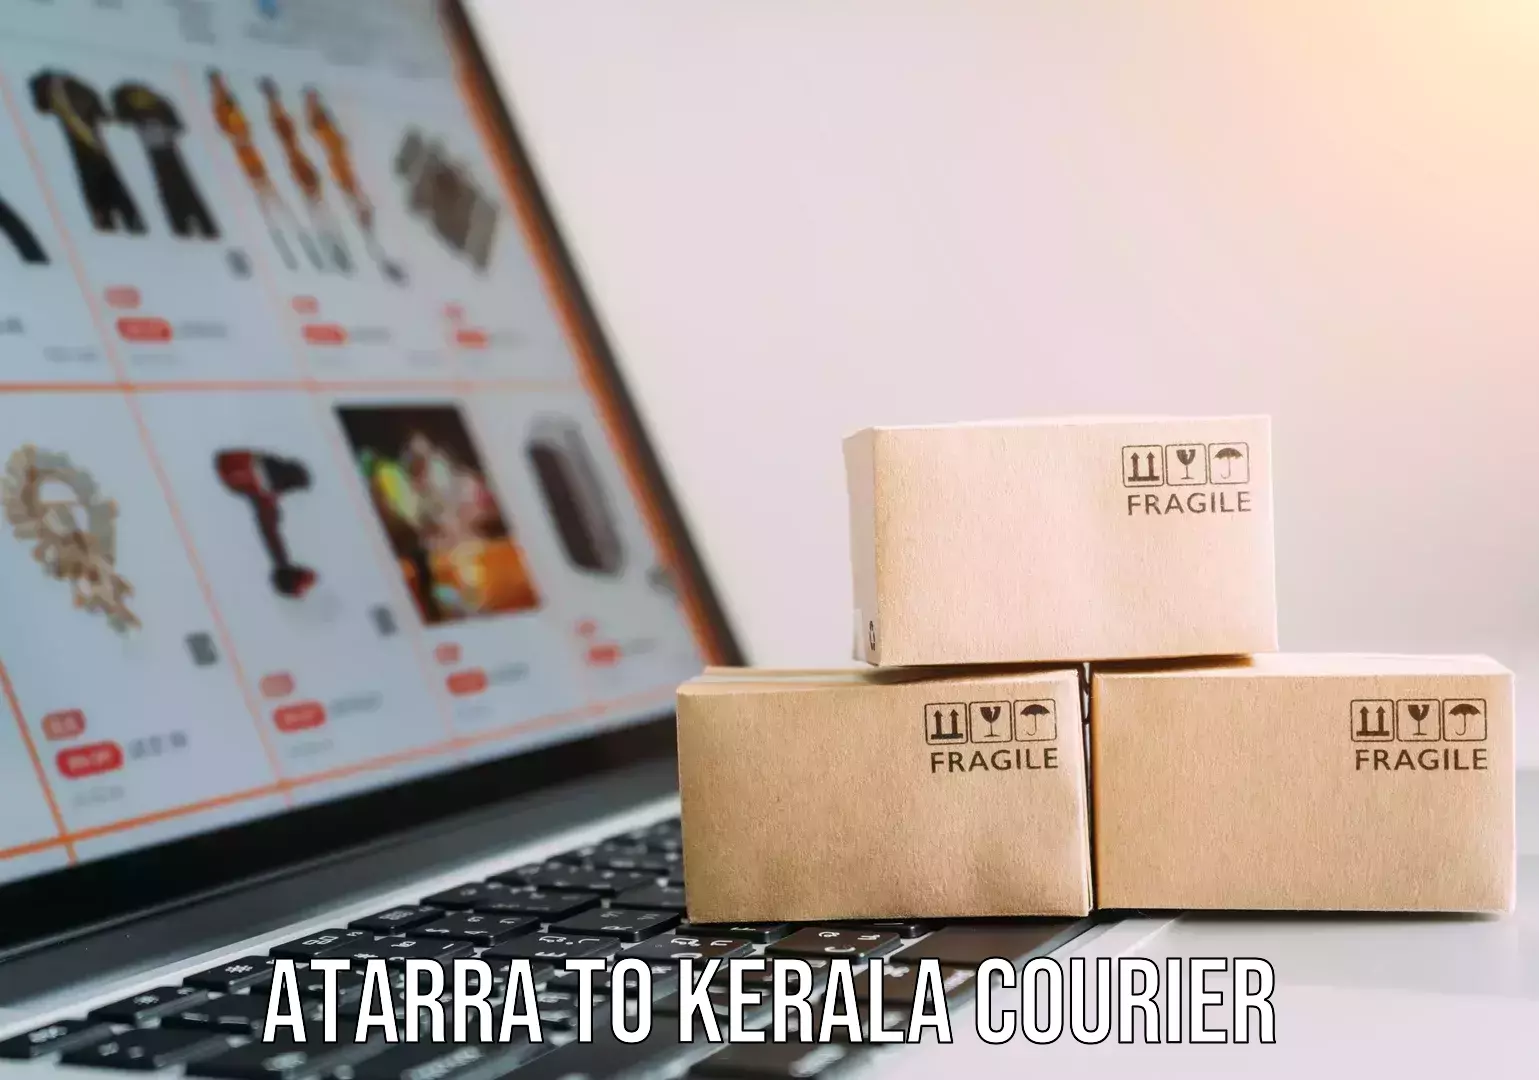 Local delivery service Atarra to Kerala